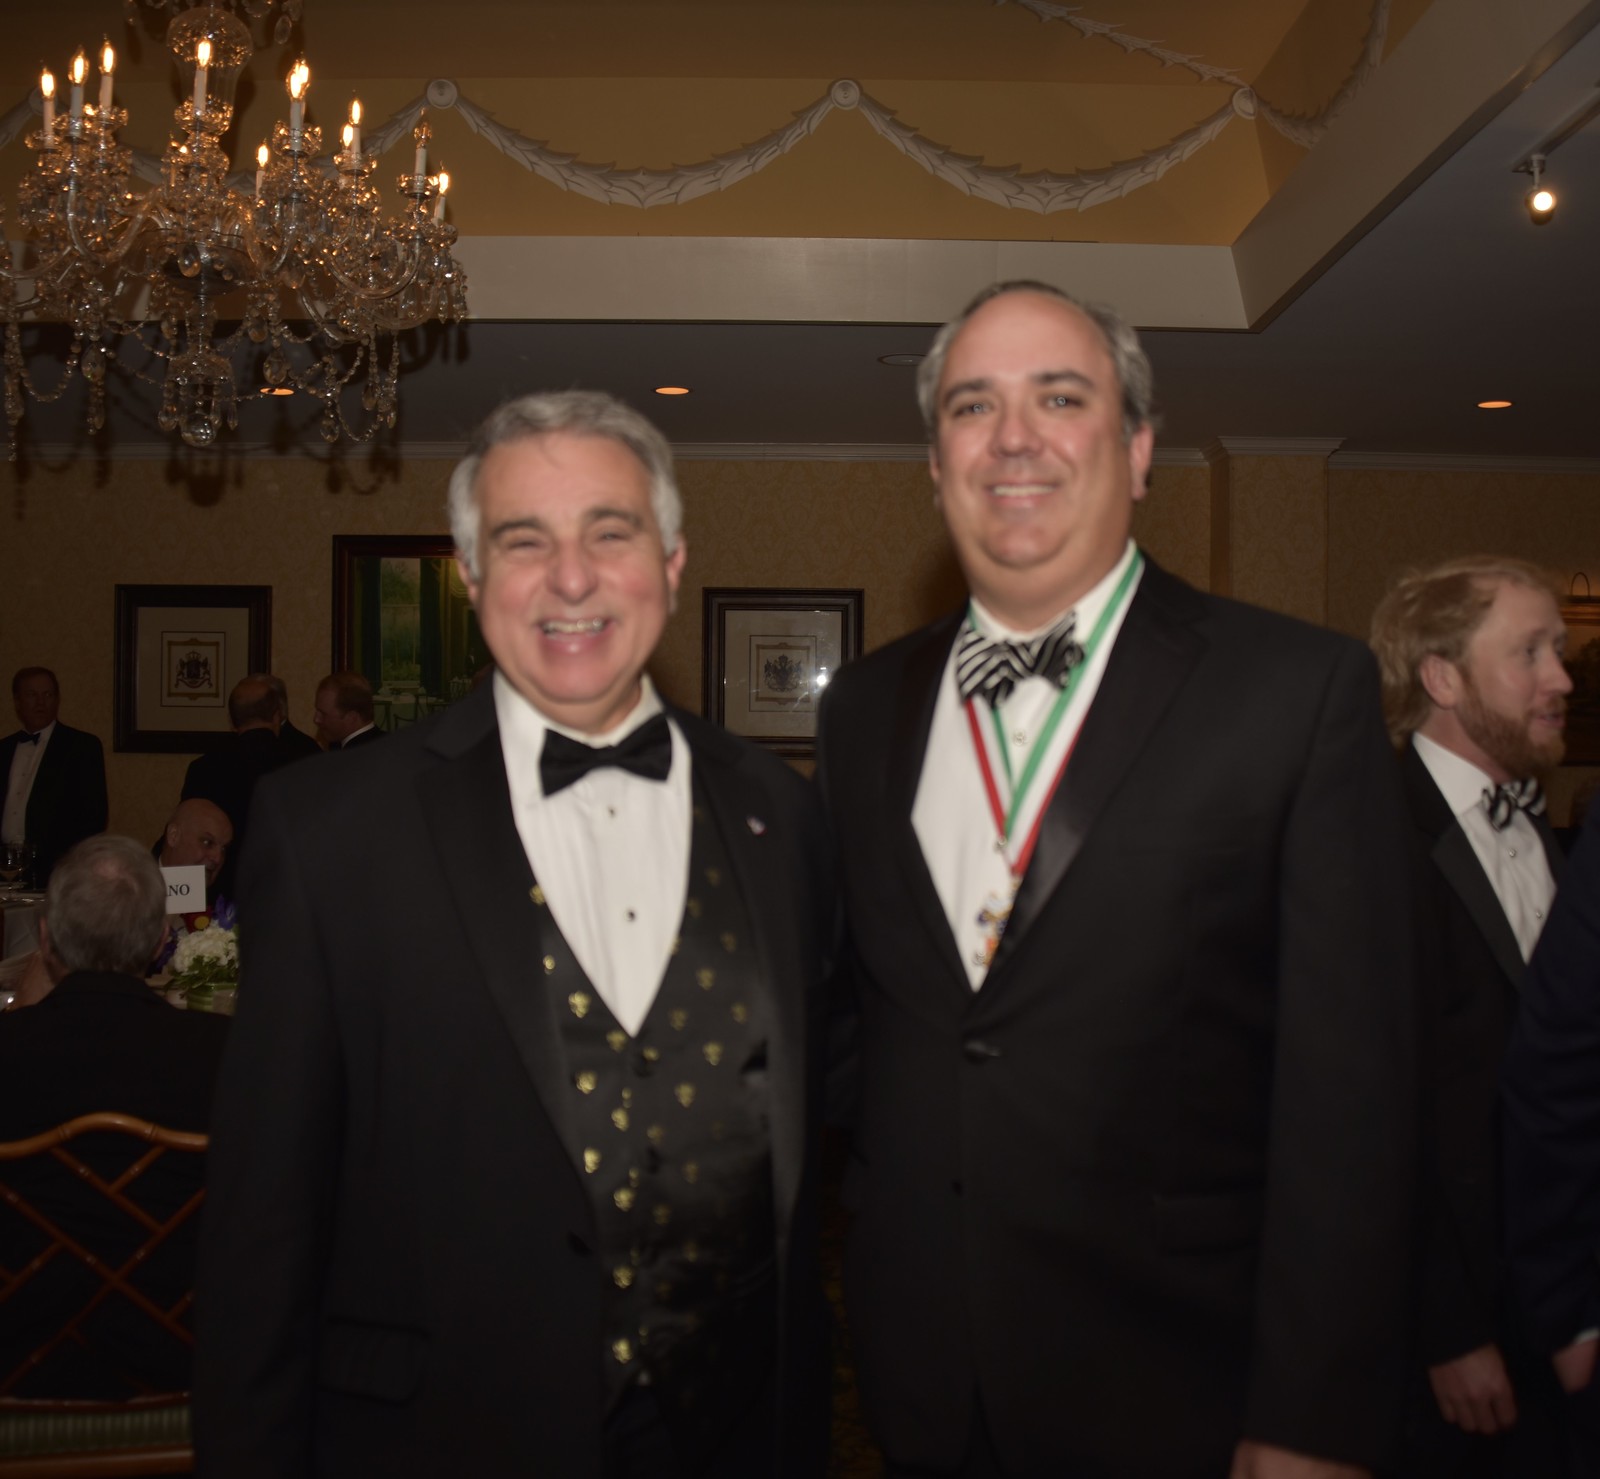 The Italian Society of Savannah’s Columbus Day Banquet